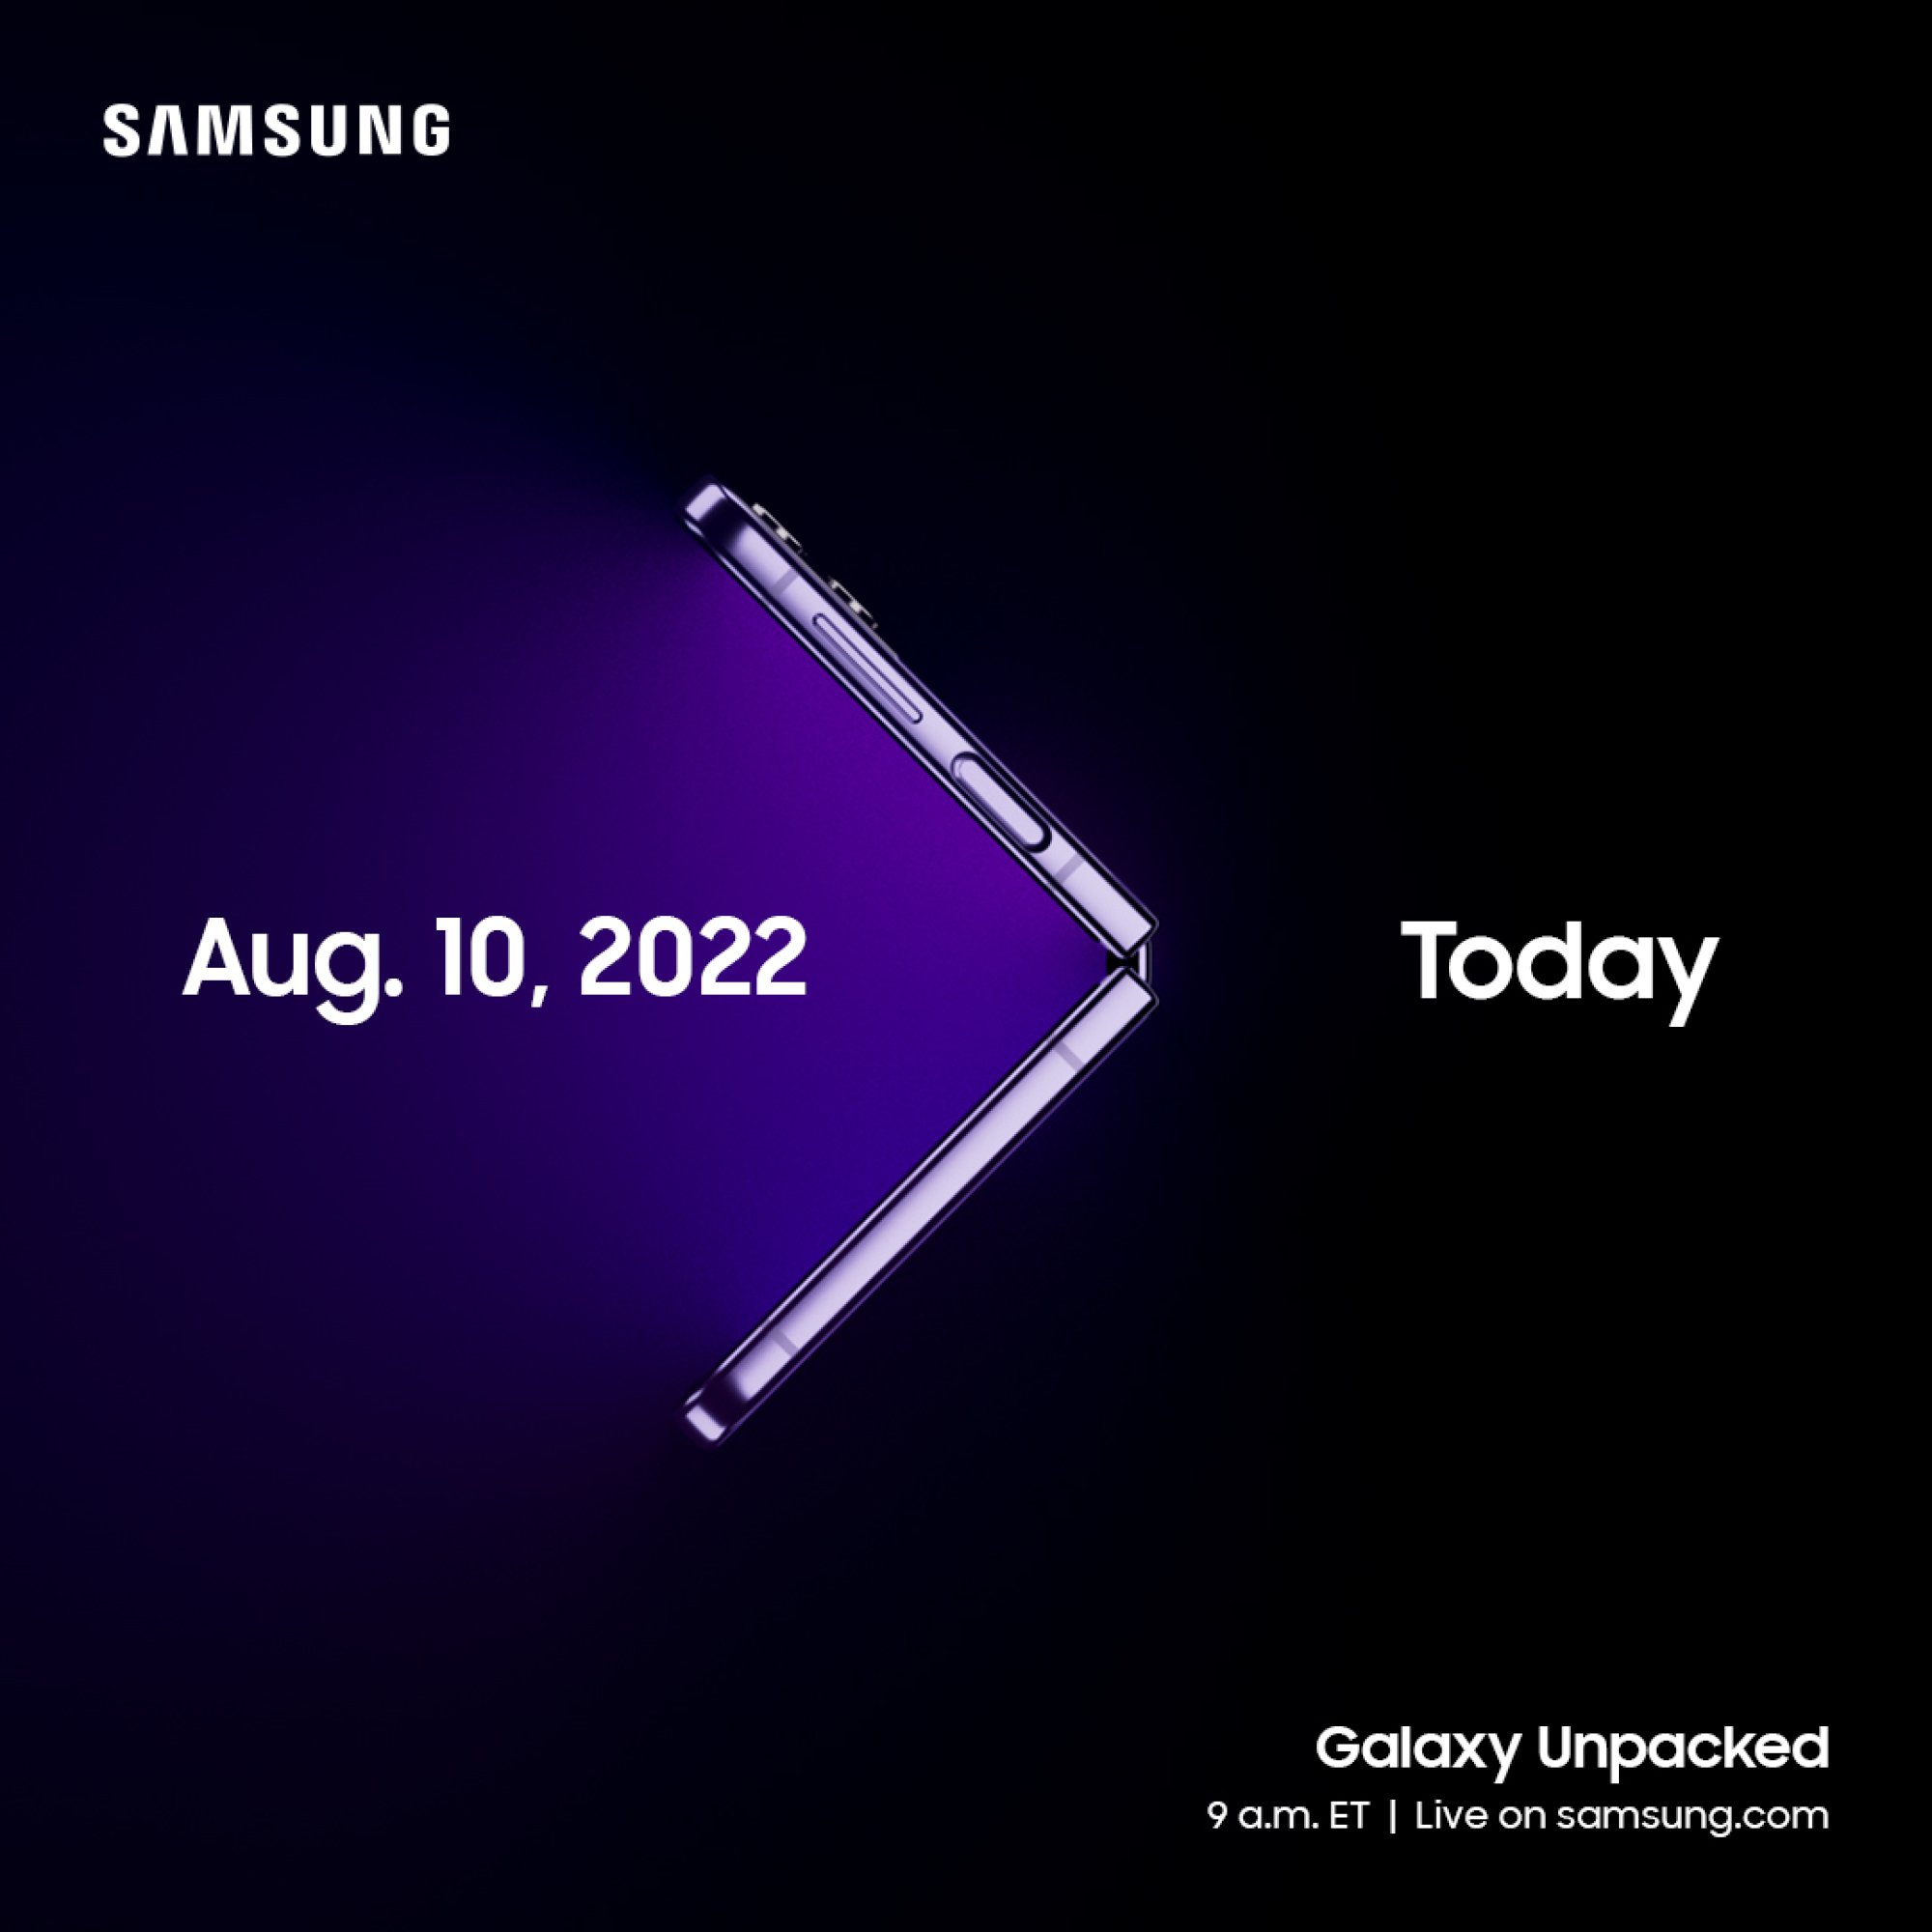 Samsung Galaxy Unpacked promo image